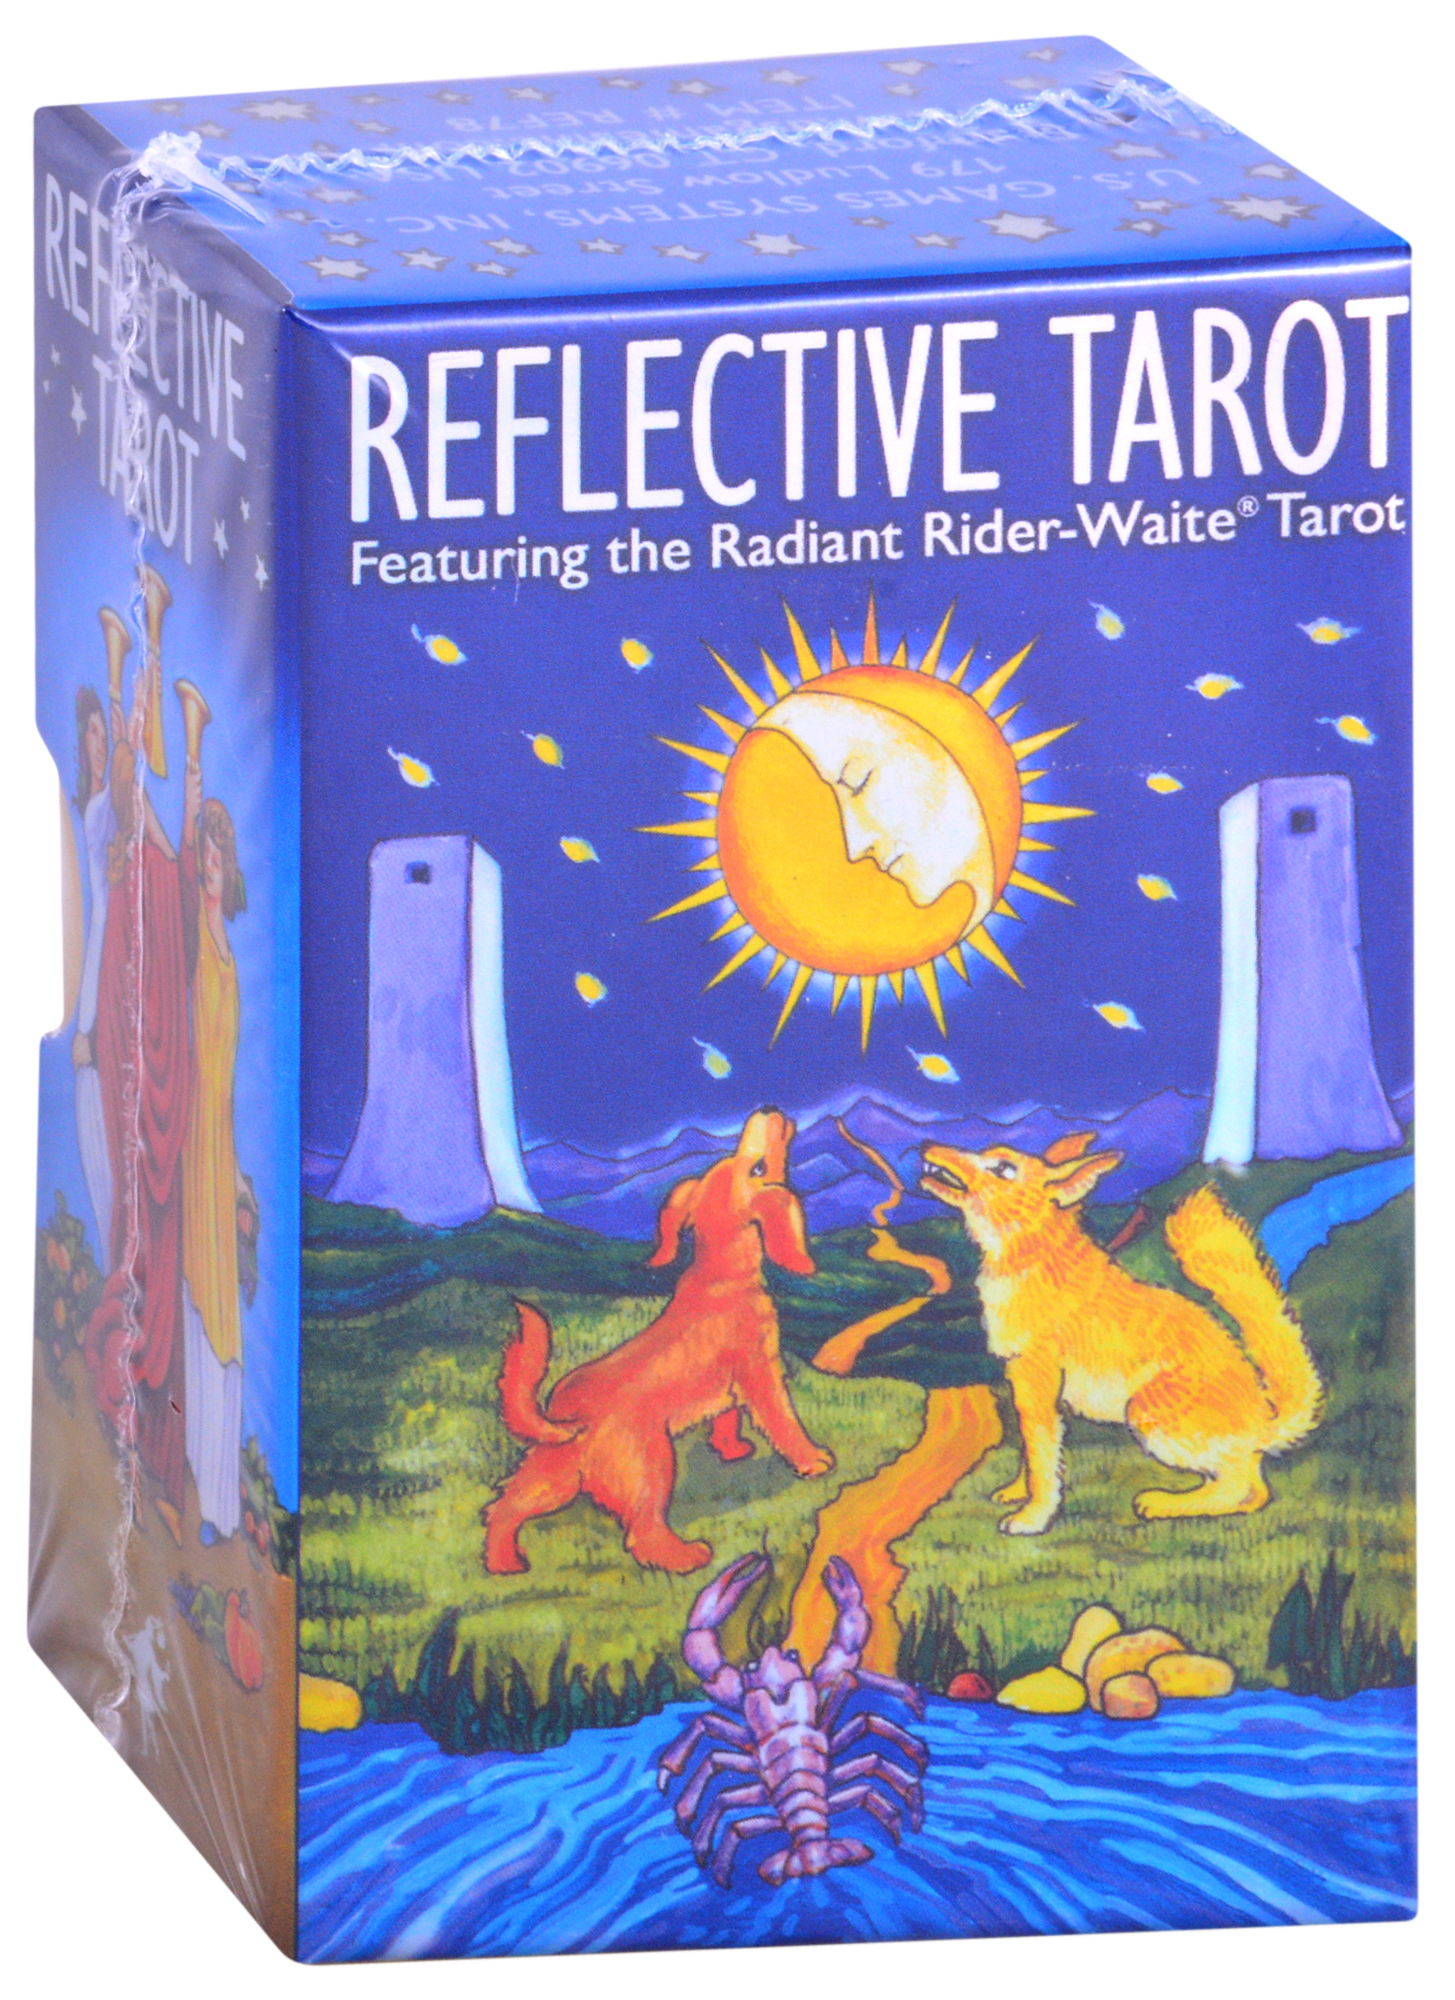 Reflective Tarot Featuring the Radiant Rider-Waite  Tarot